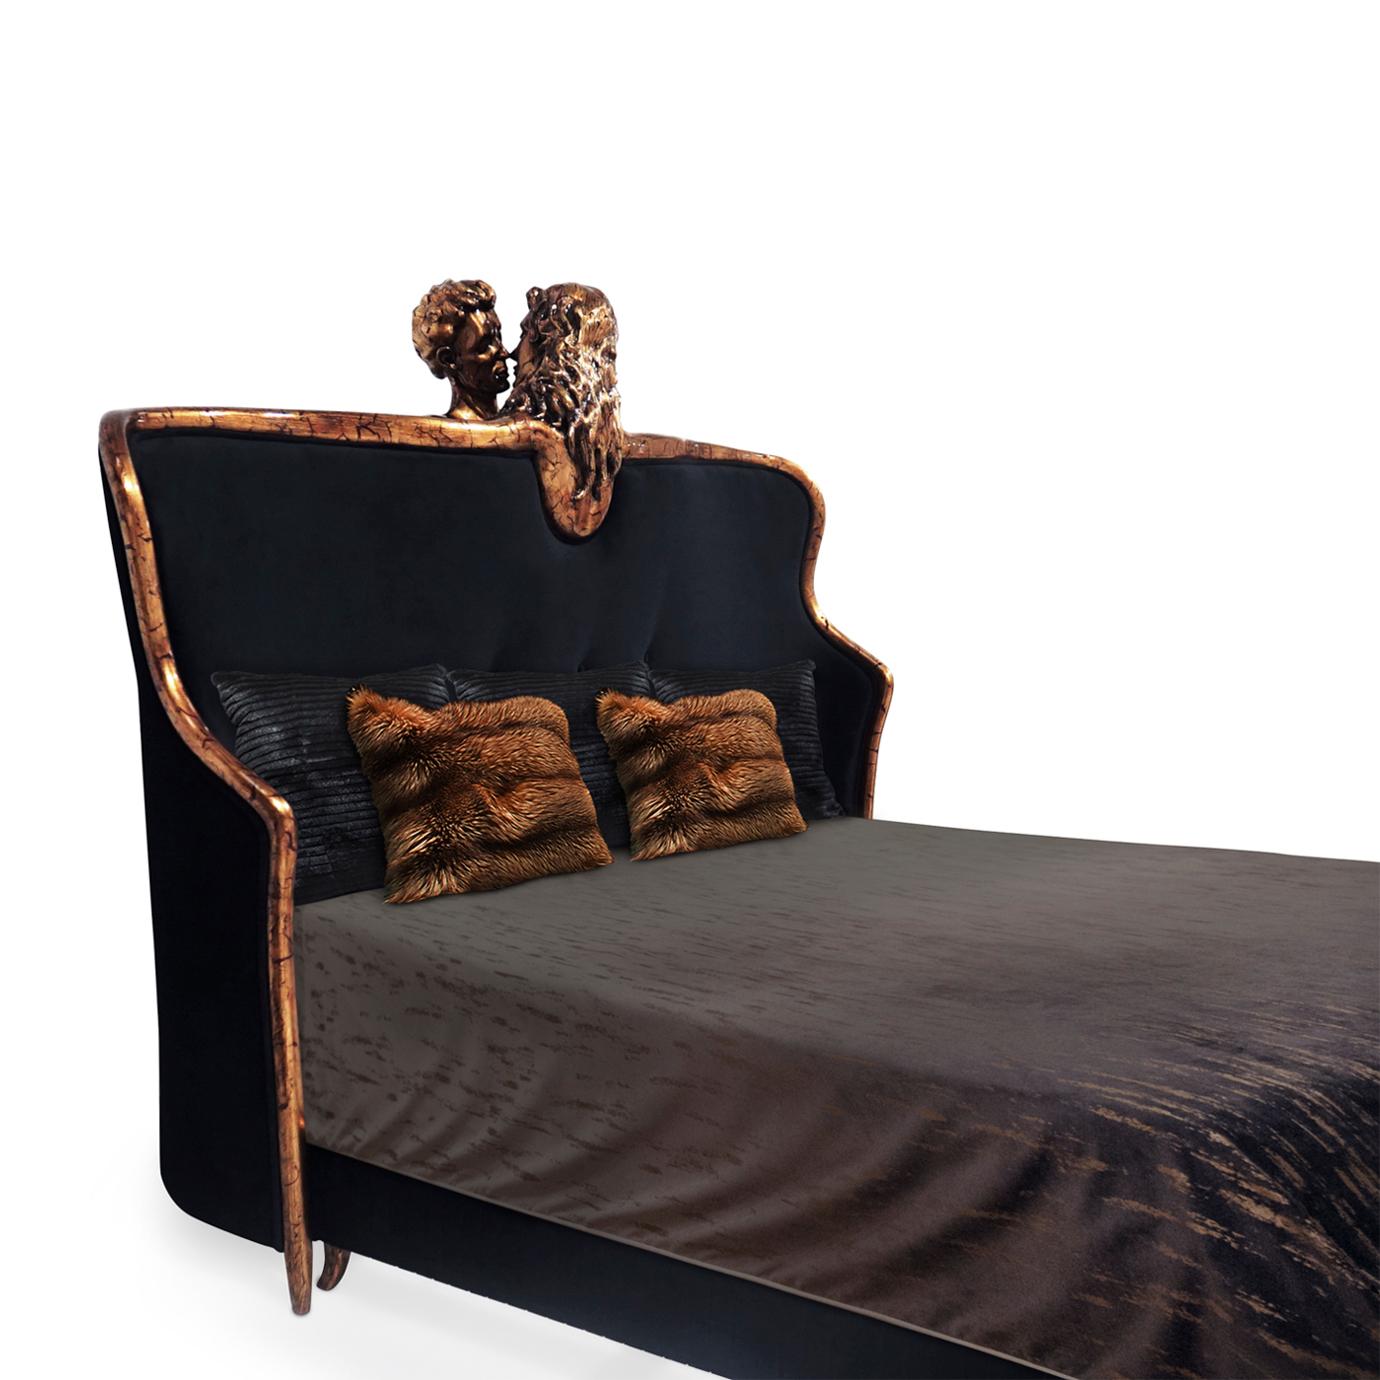 Portuguese Forbidden Black Bed King Size For Sale